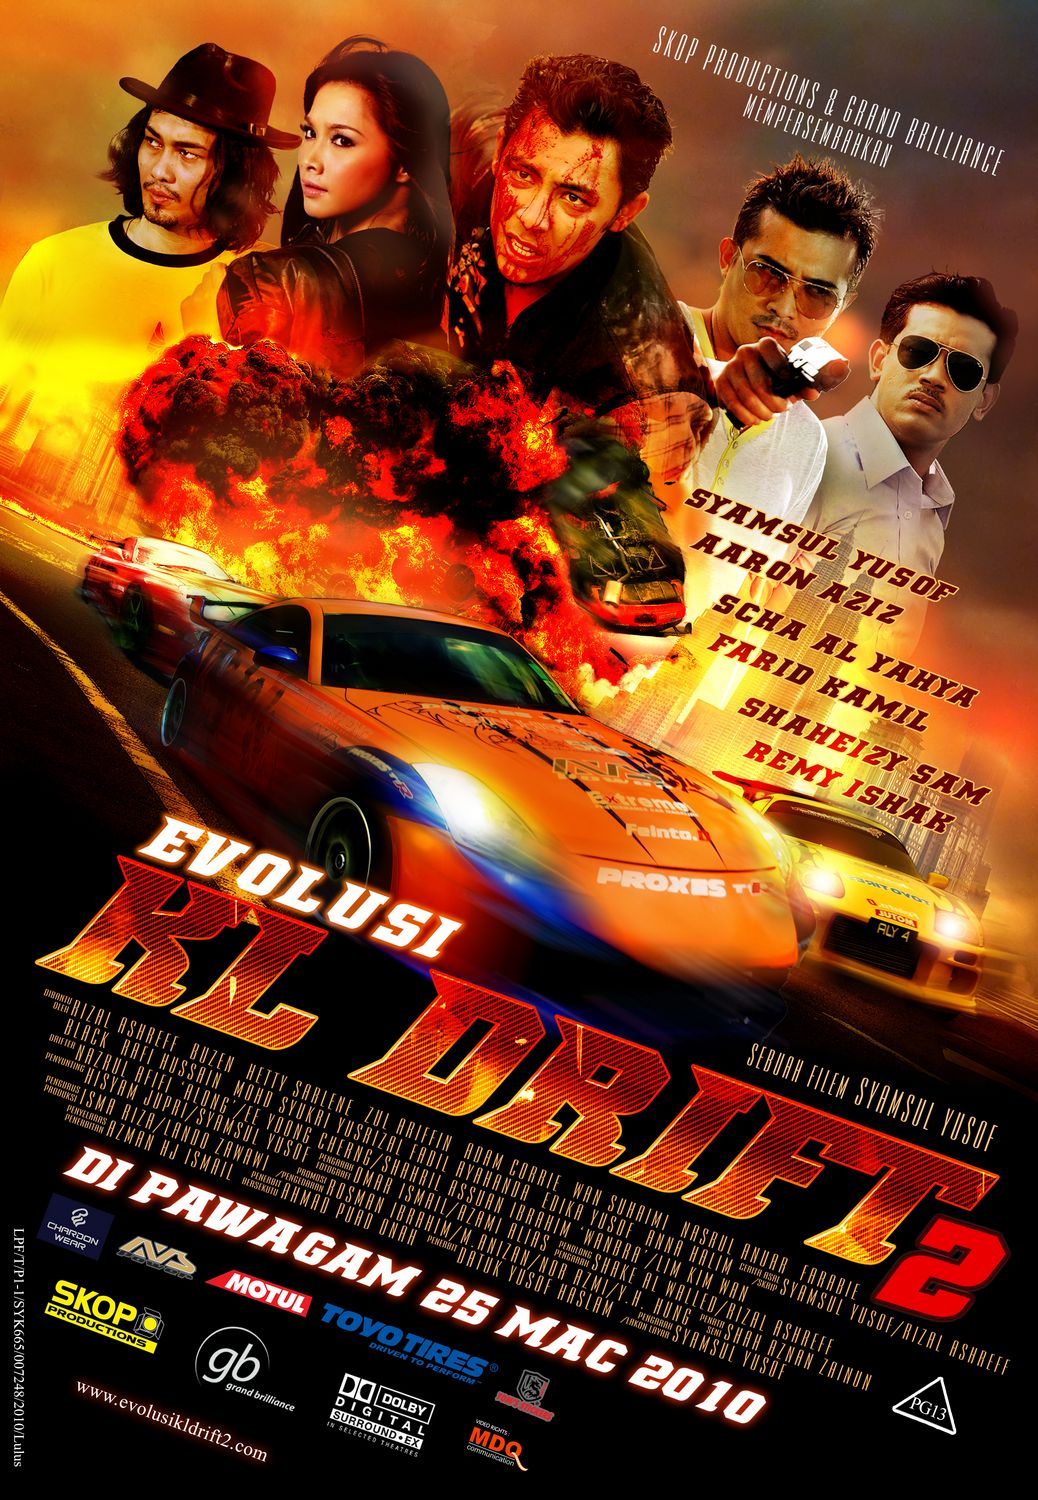 Extra Large Movie Poster Image for Evolusi: KL Drift 2 